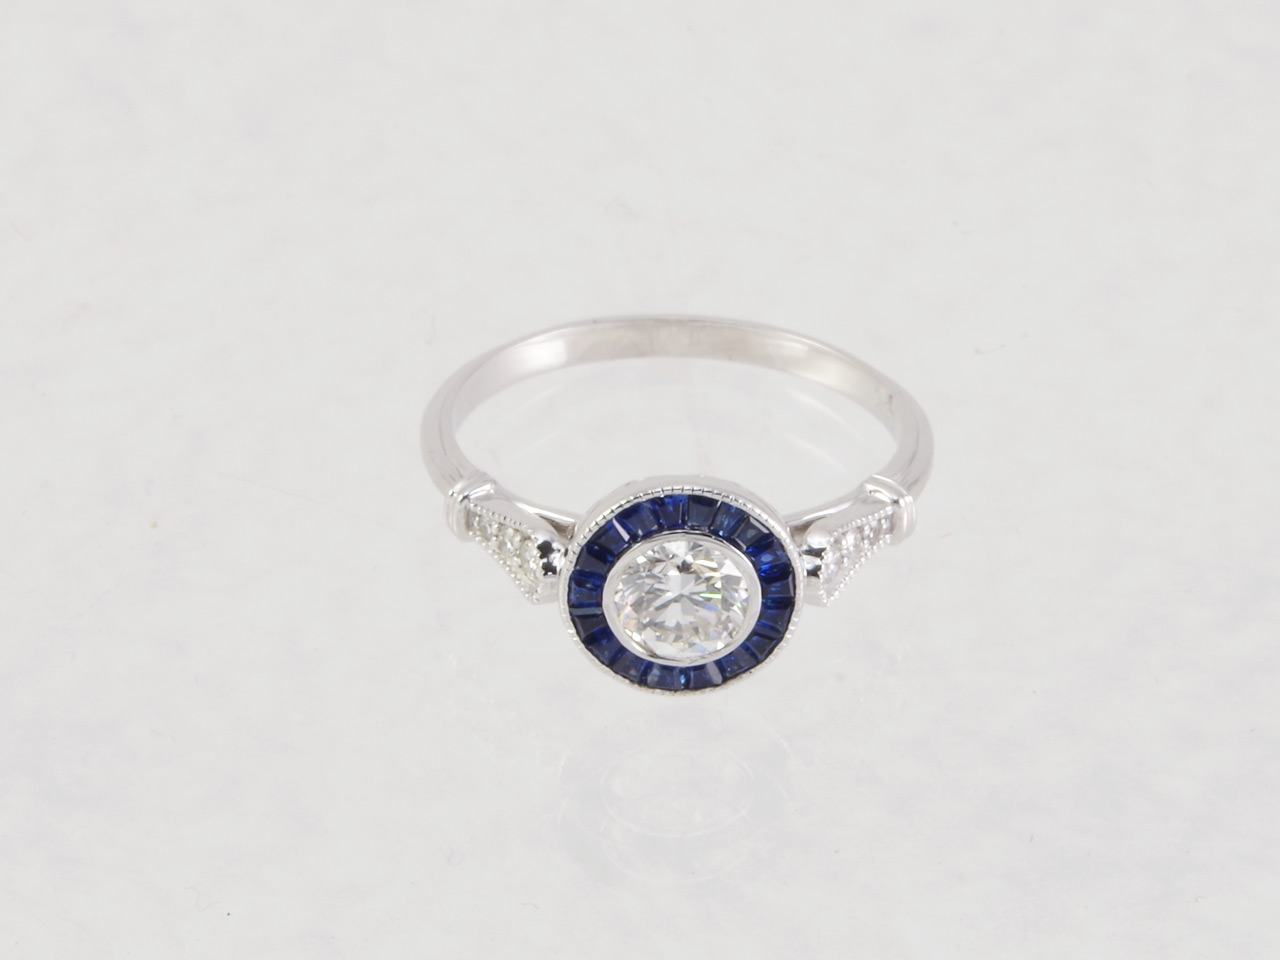 Dianmond & Sapphire Engagement Ring Flat